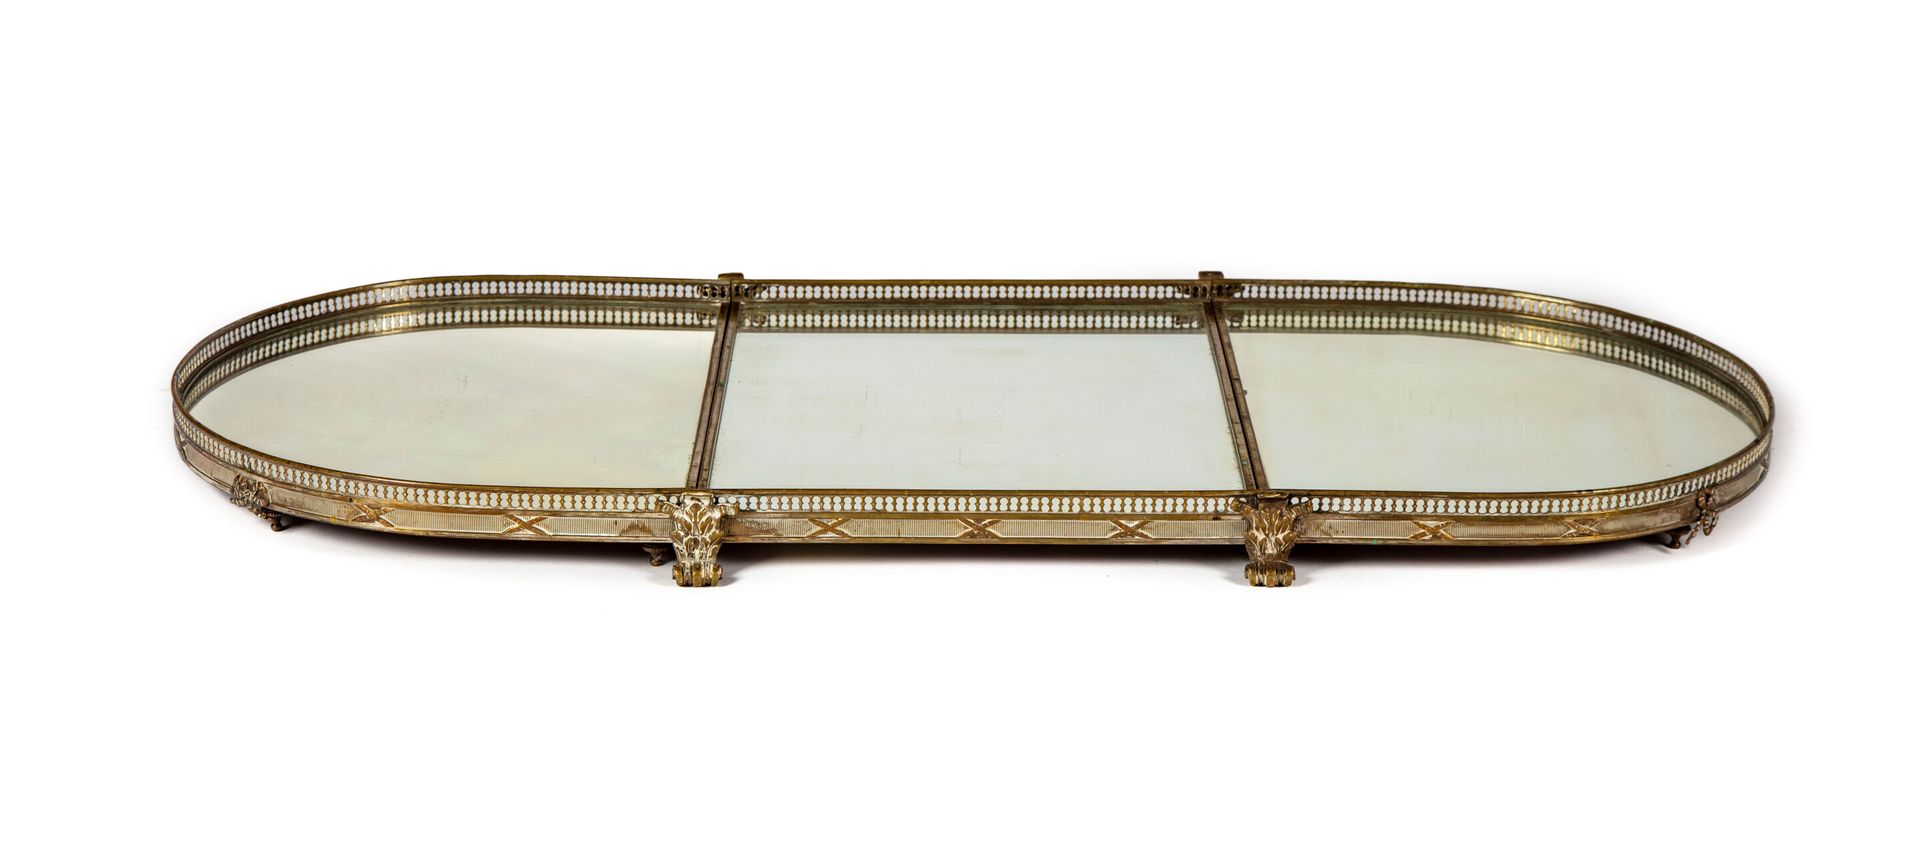 Null 大型三部分镀银金属桌面（已磨损），有一个镂空的画廊边框和一个镜子背景，站在爪脚上，上面有树叶和丝带。
18-19世纪风格
宽：90厘米；长：38厘米